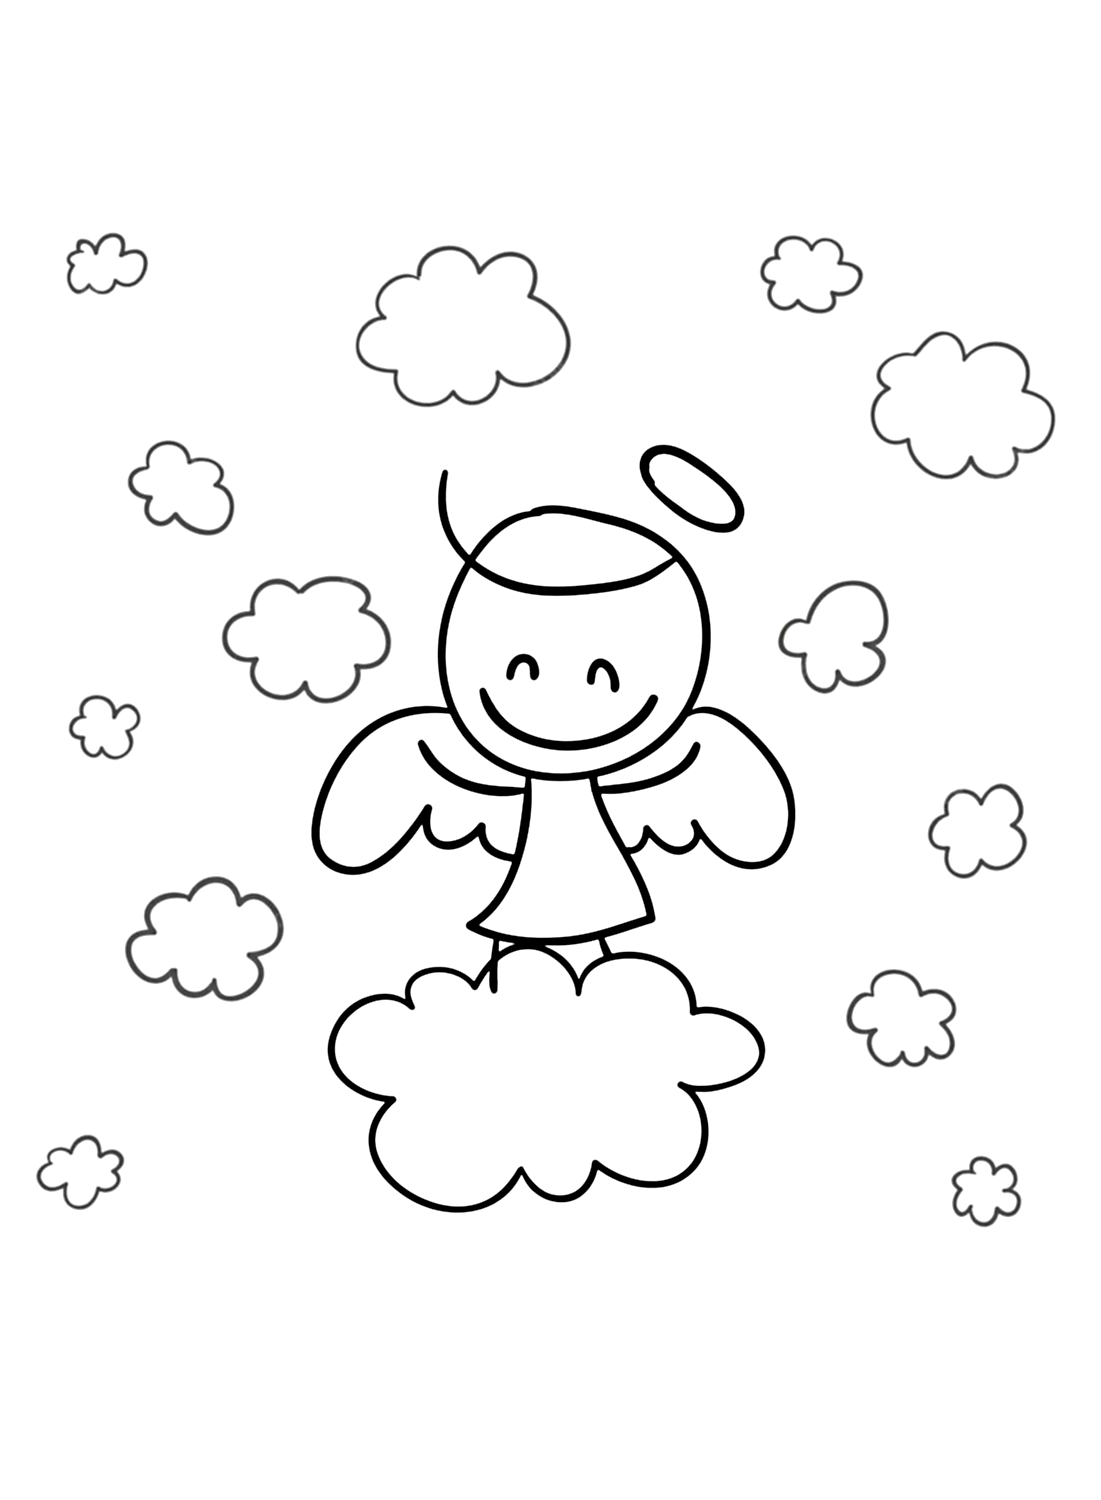 Imagens para colorir de anjo fofo de Angel